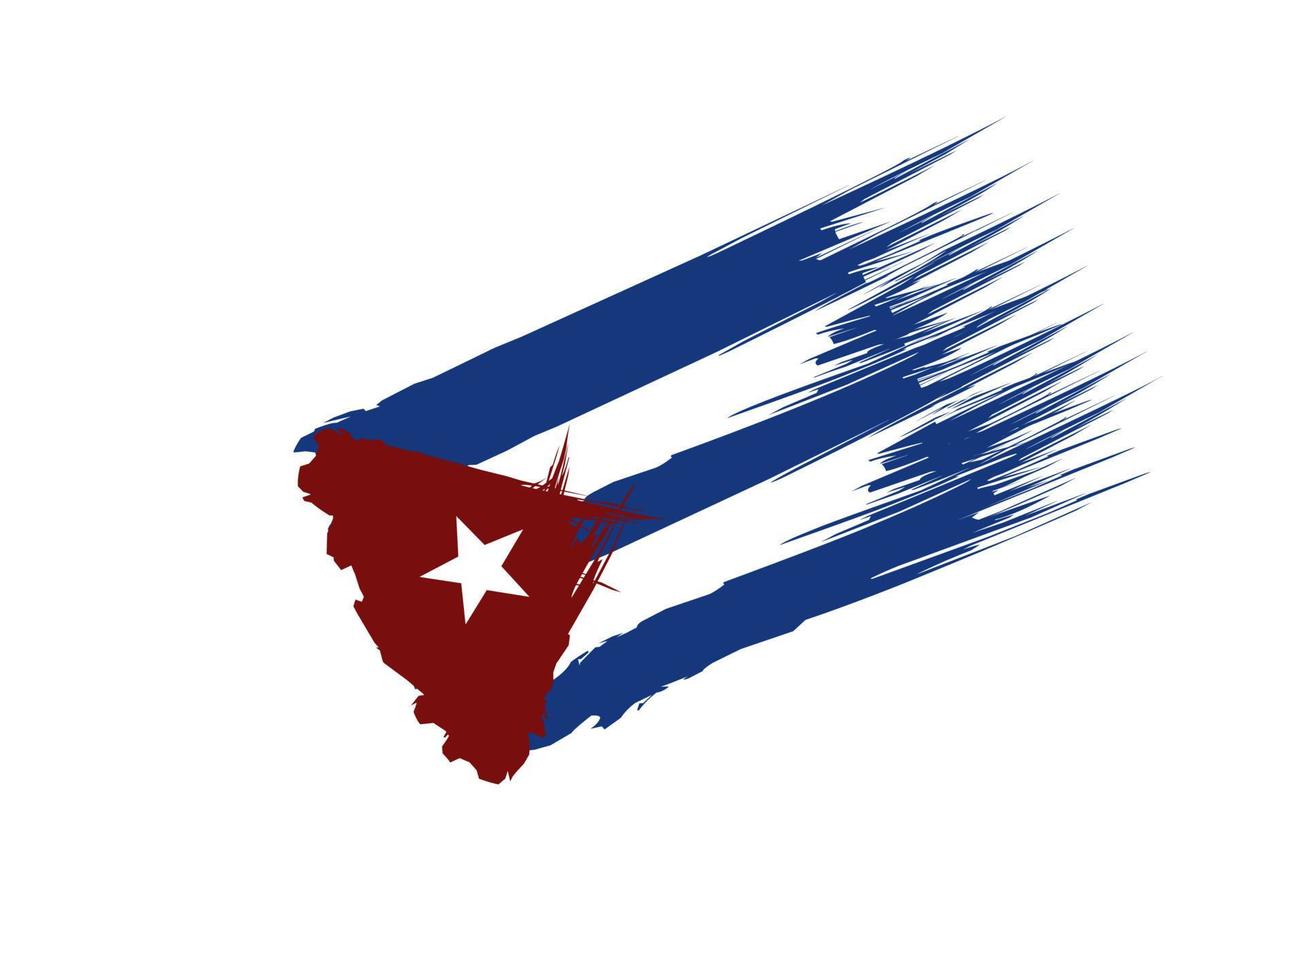 Kuba Flagge Symbol, Illustration von National Flagge Design mit Eleganz Konzept vektor